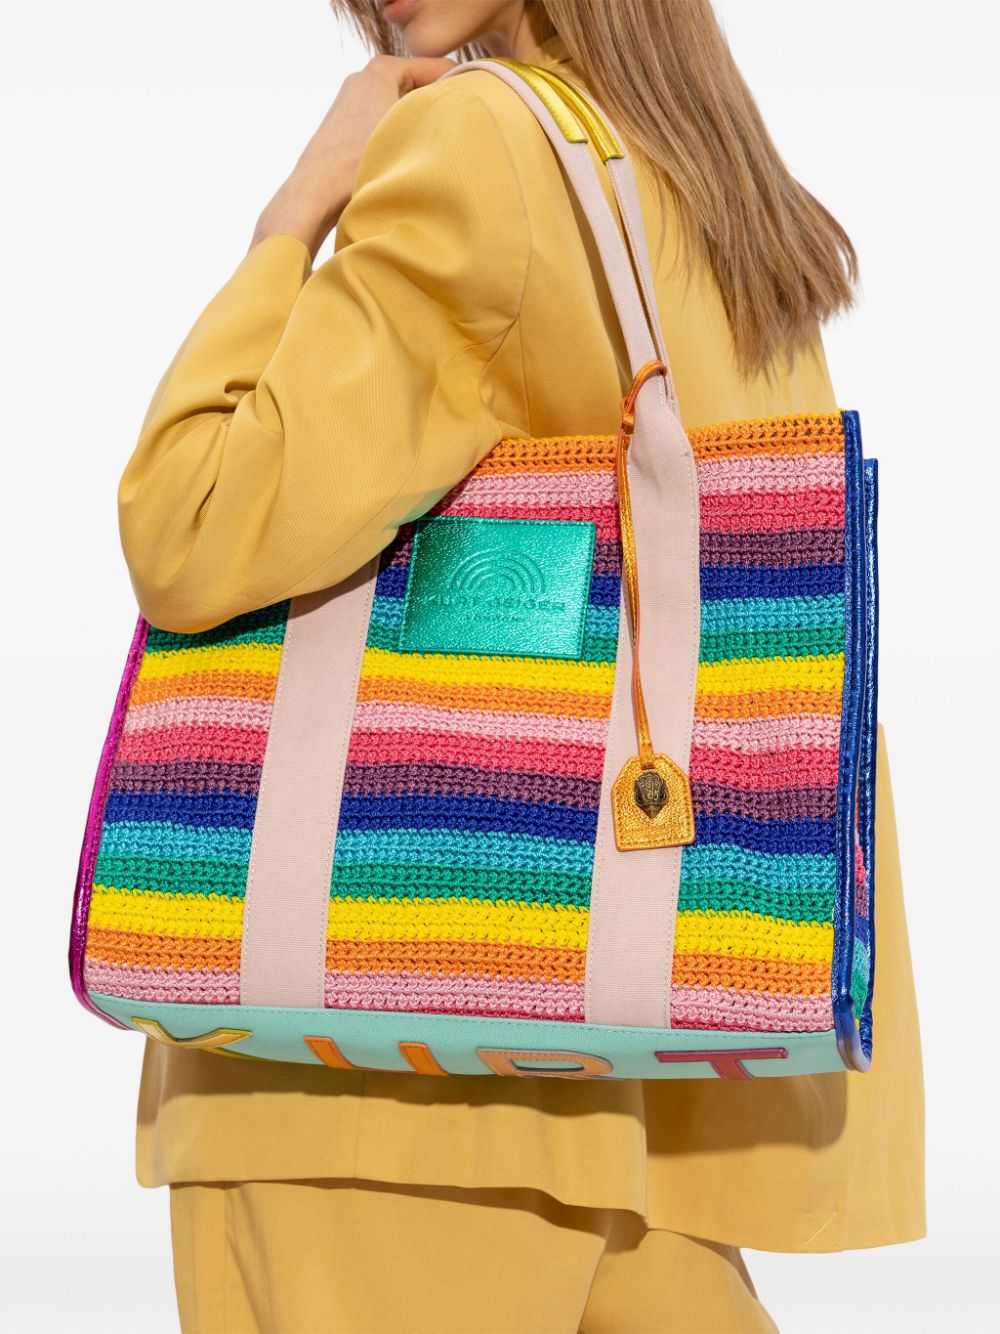 Kurt Geiger London SOUTHBANK rainbow crochet tote bag - Roze